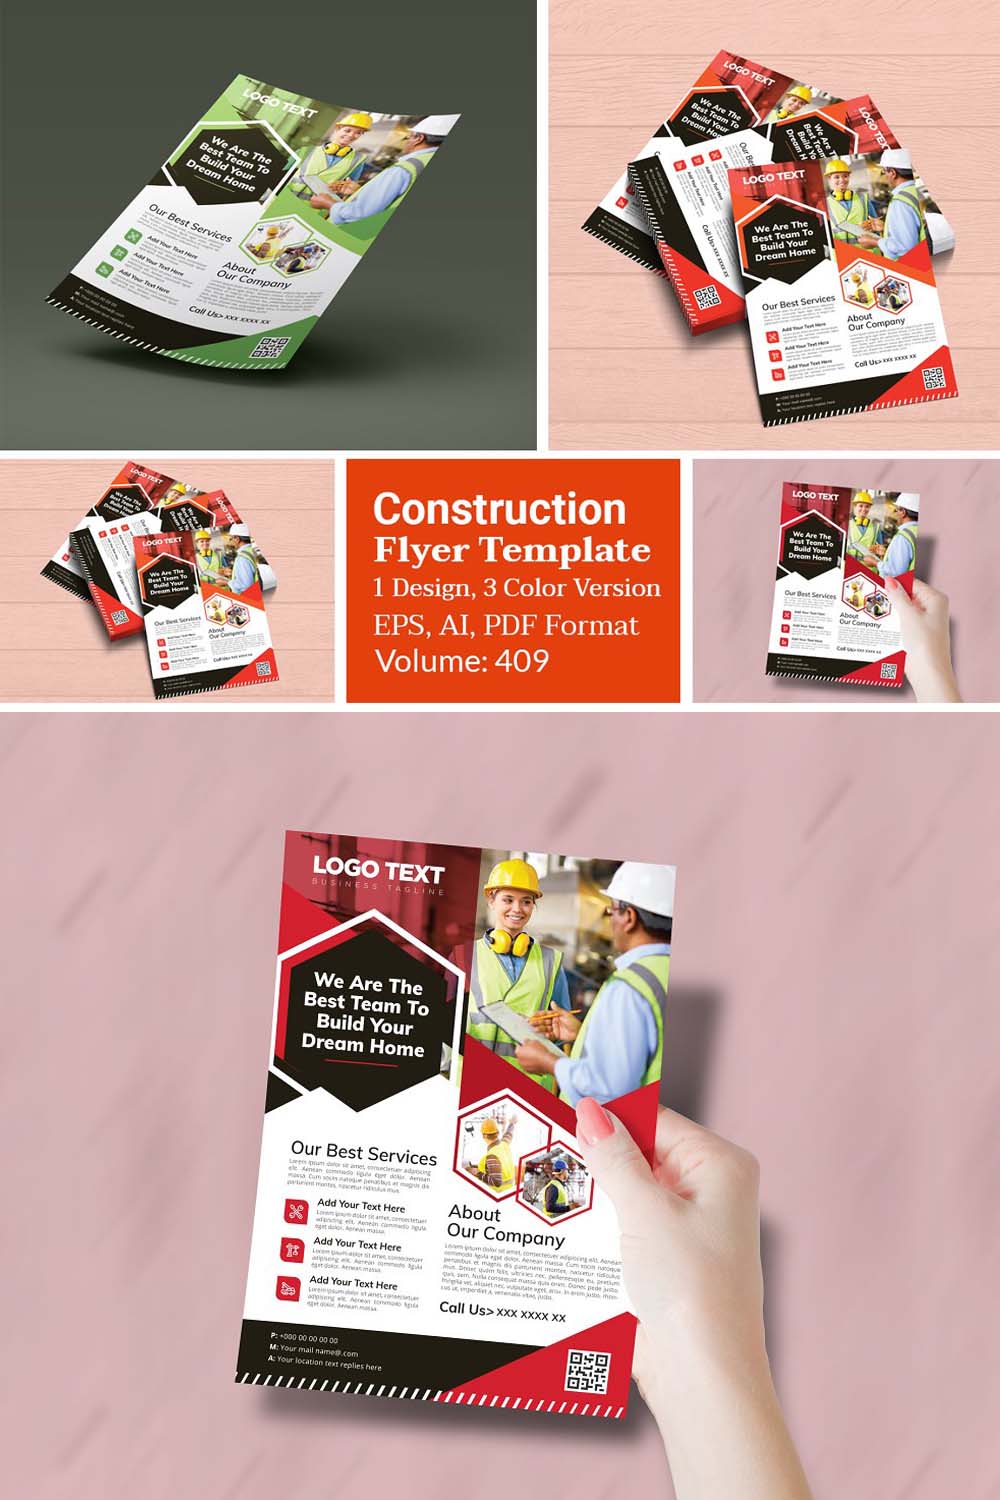 Business Construction Flyer Design pinterest preview image.